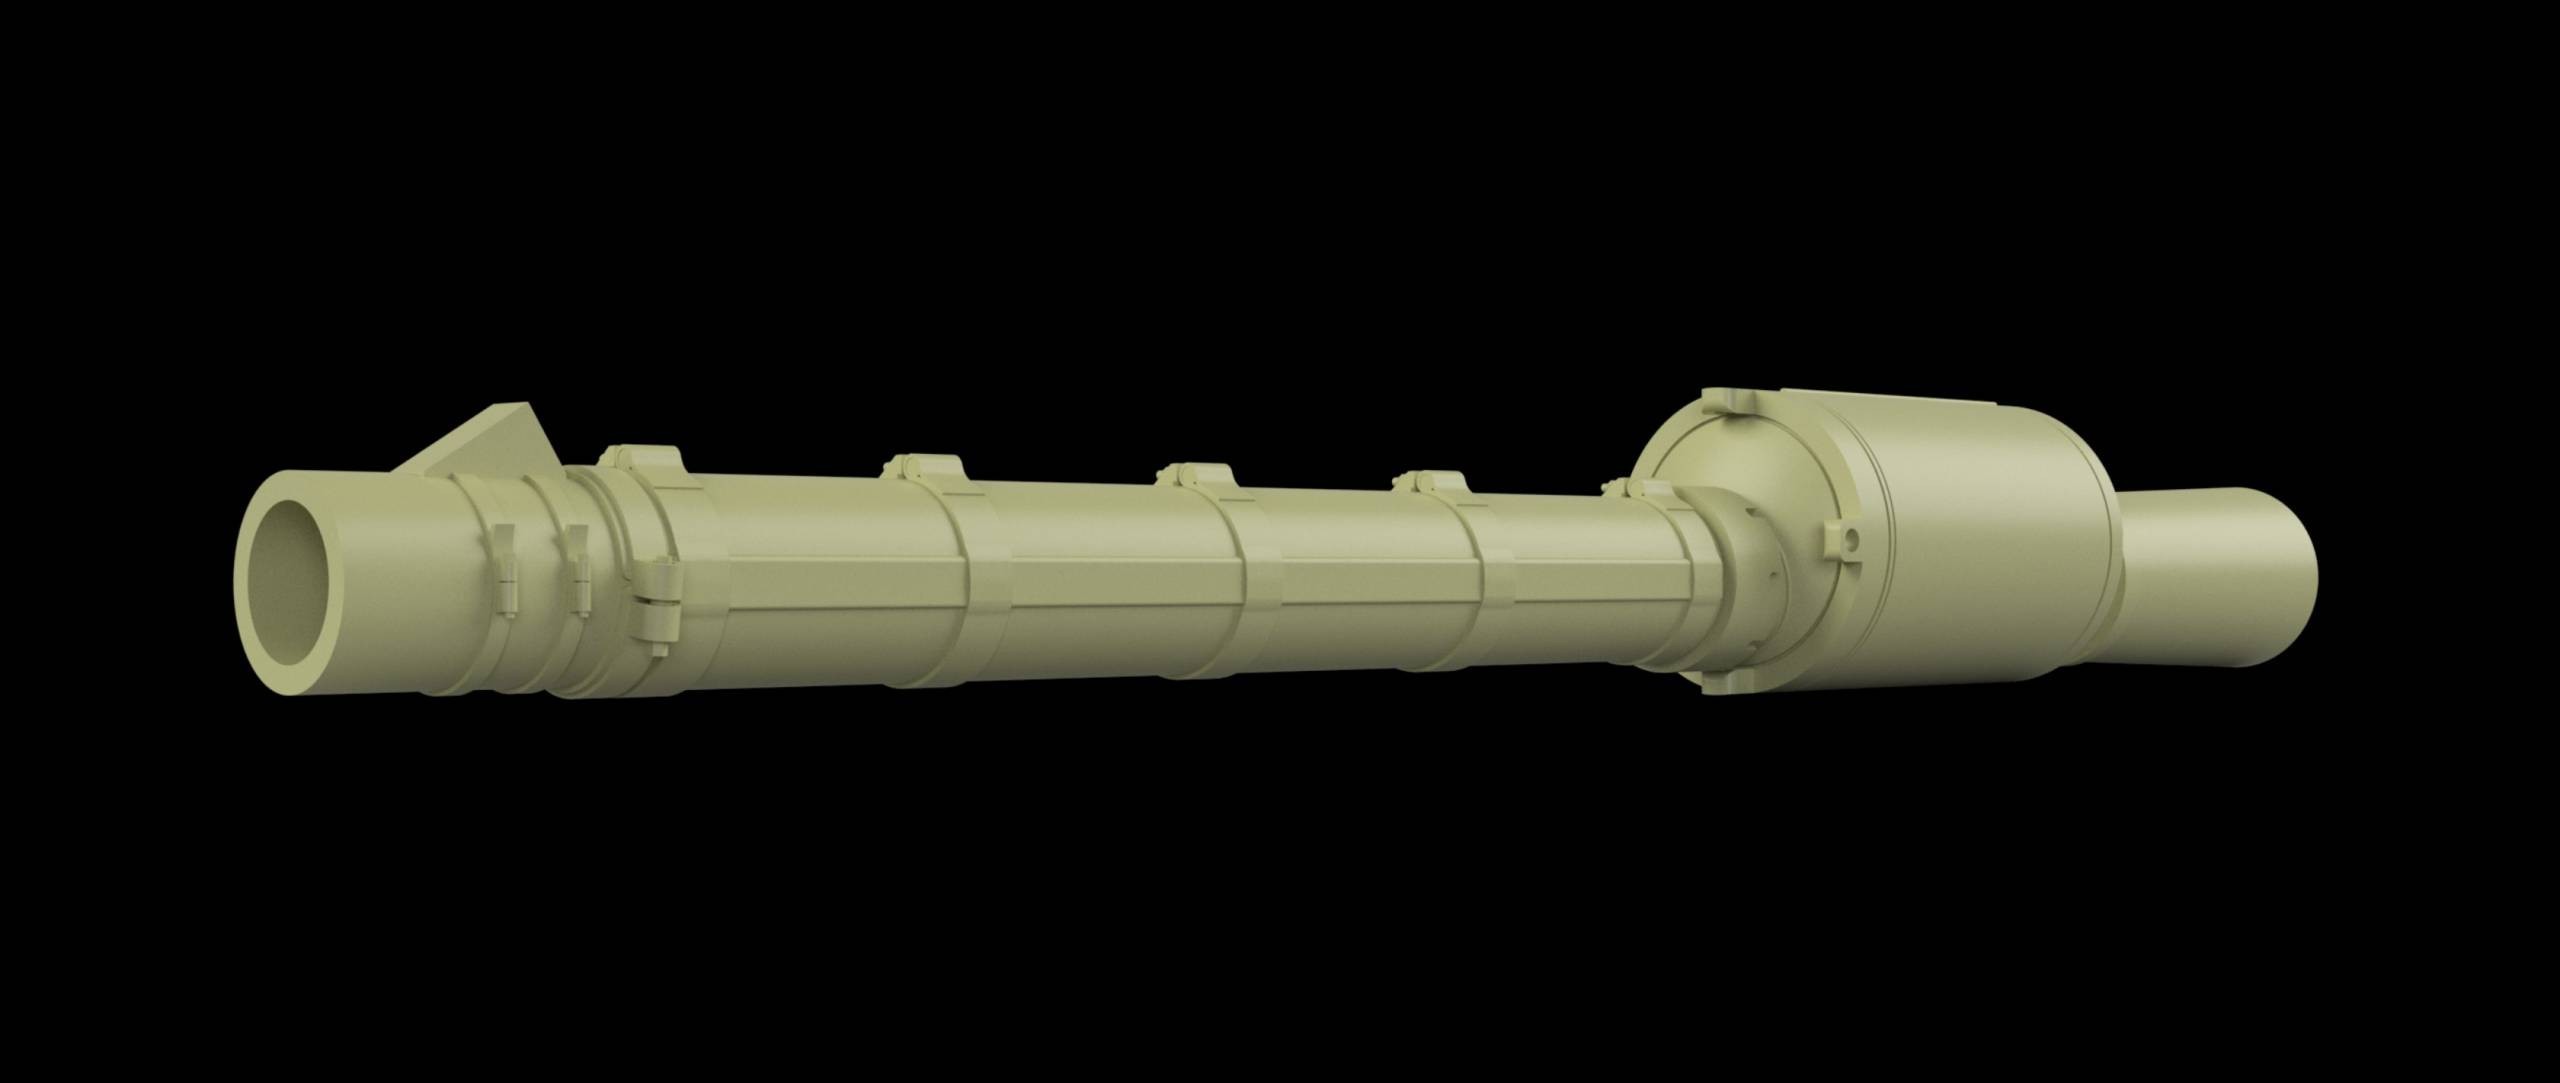 GB35-107 IMI120 Gun barrel for “Merkava” Mk4